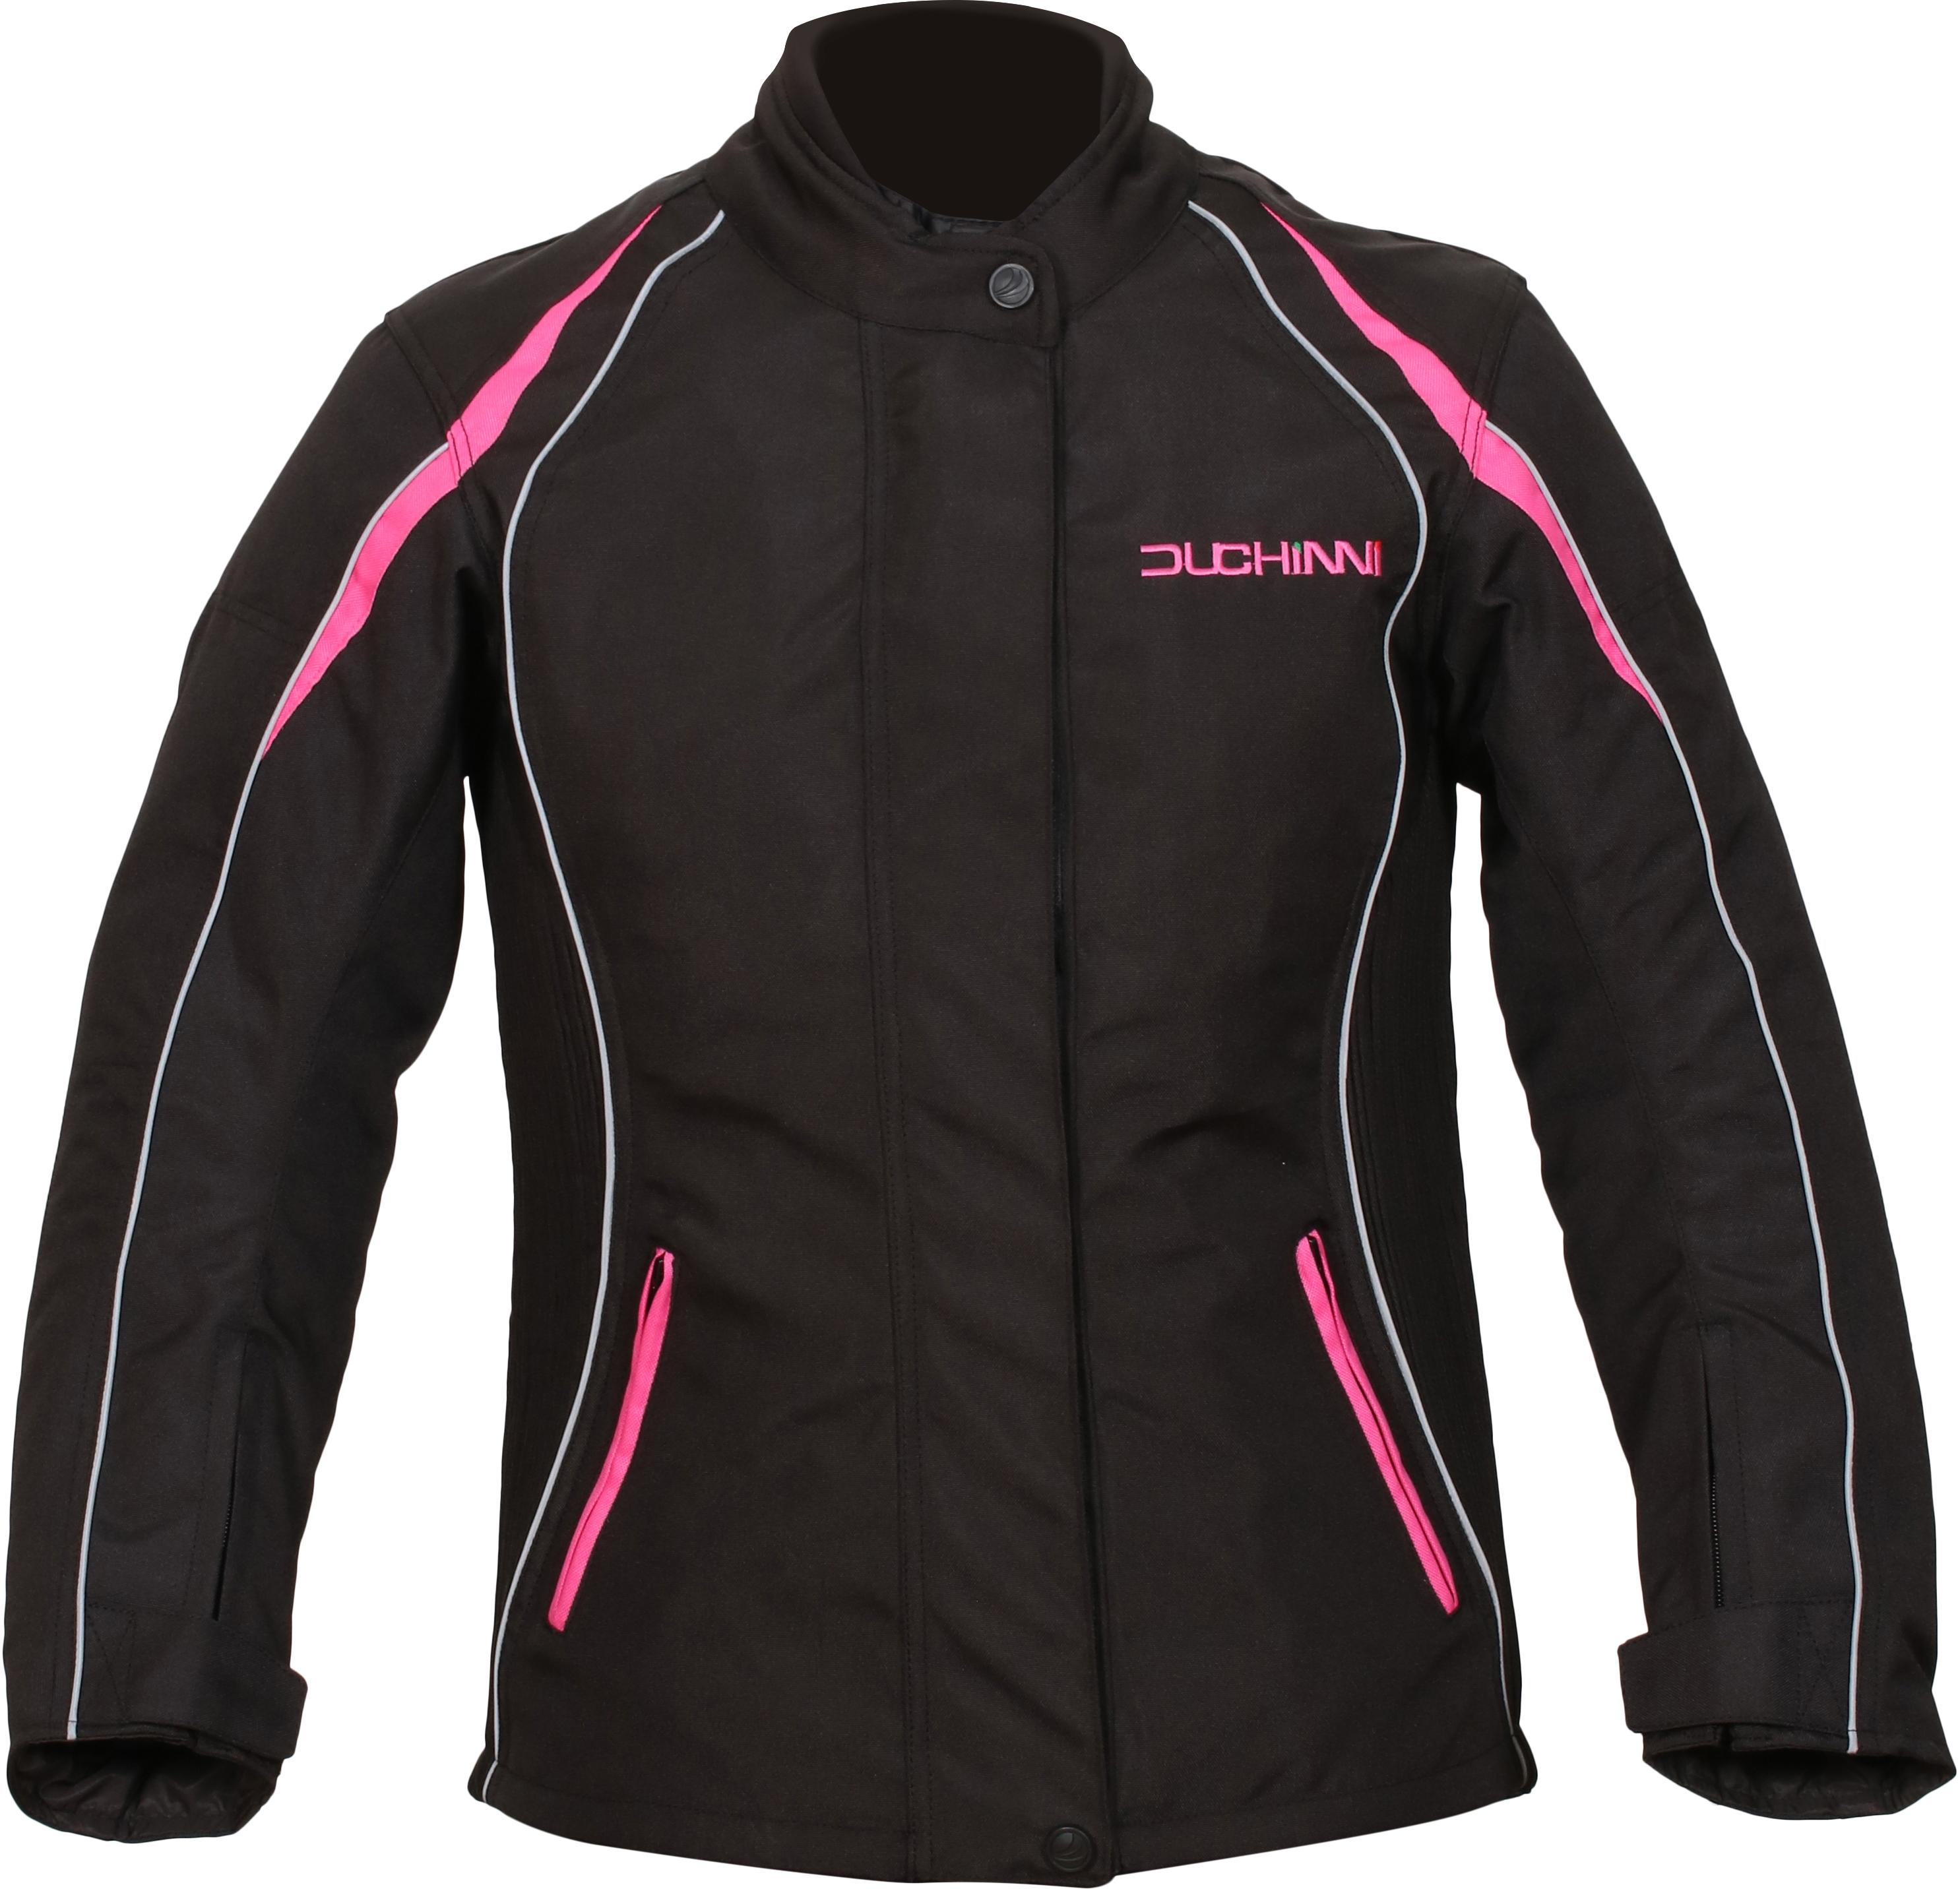 Duchinni Vienna Ladies Motorcycle Jacket - Black And Pink, 14